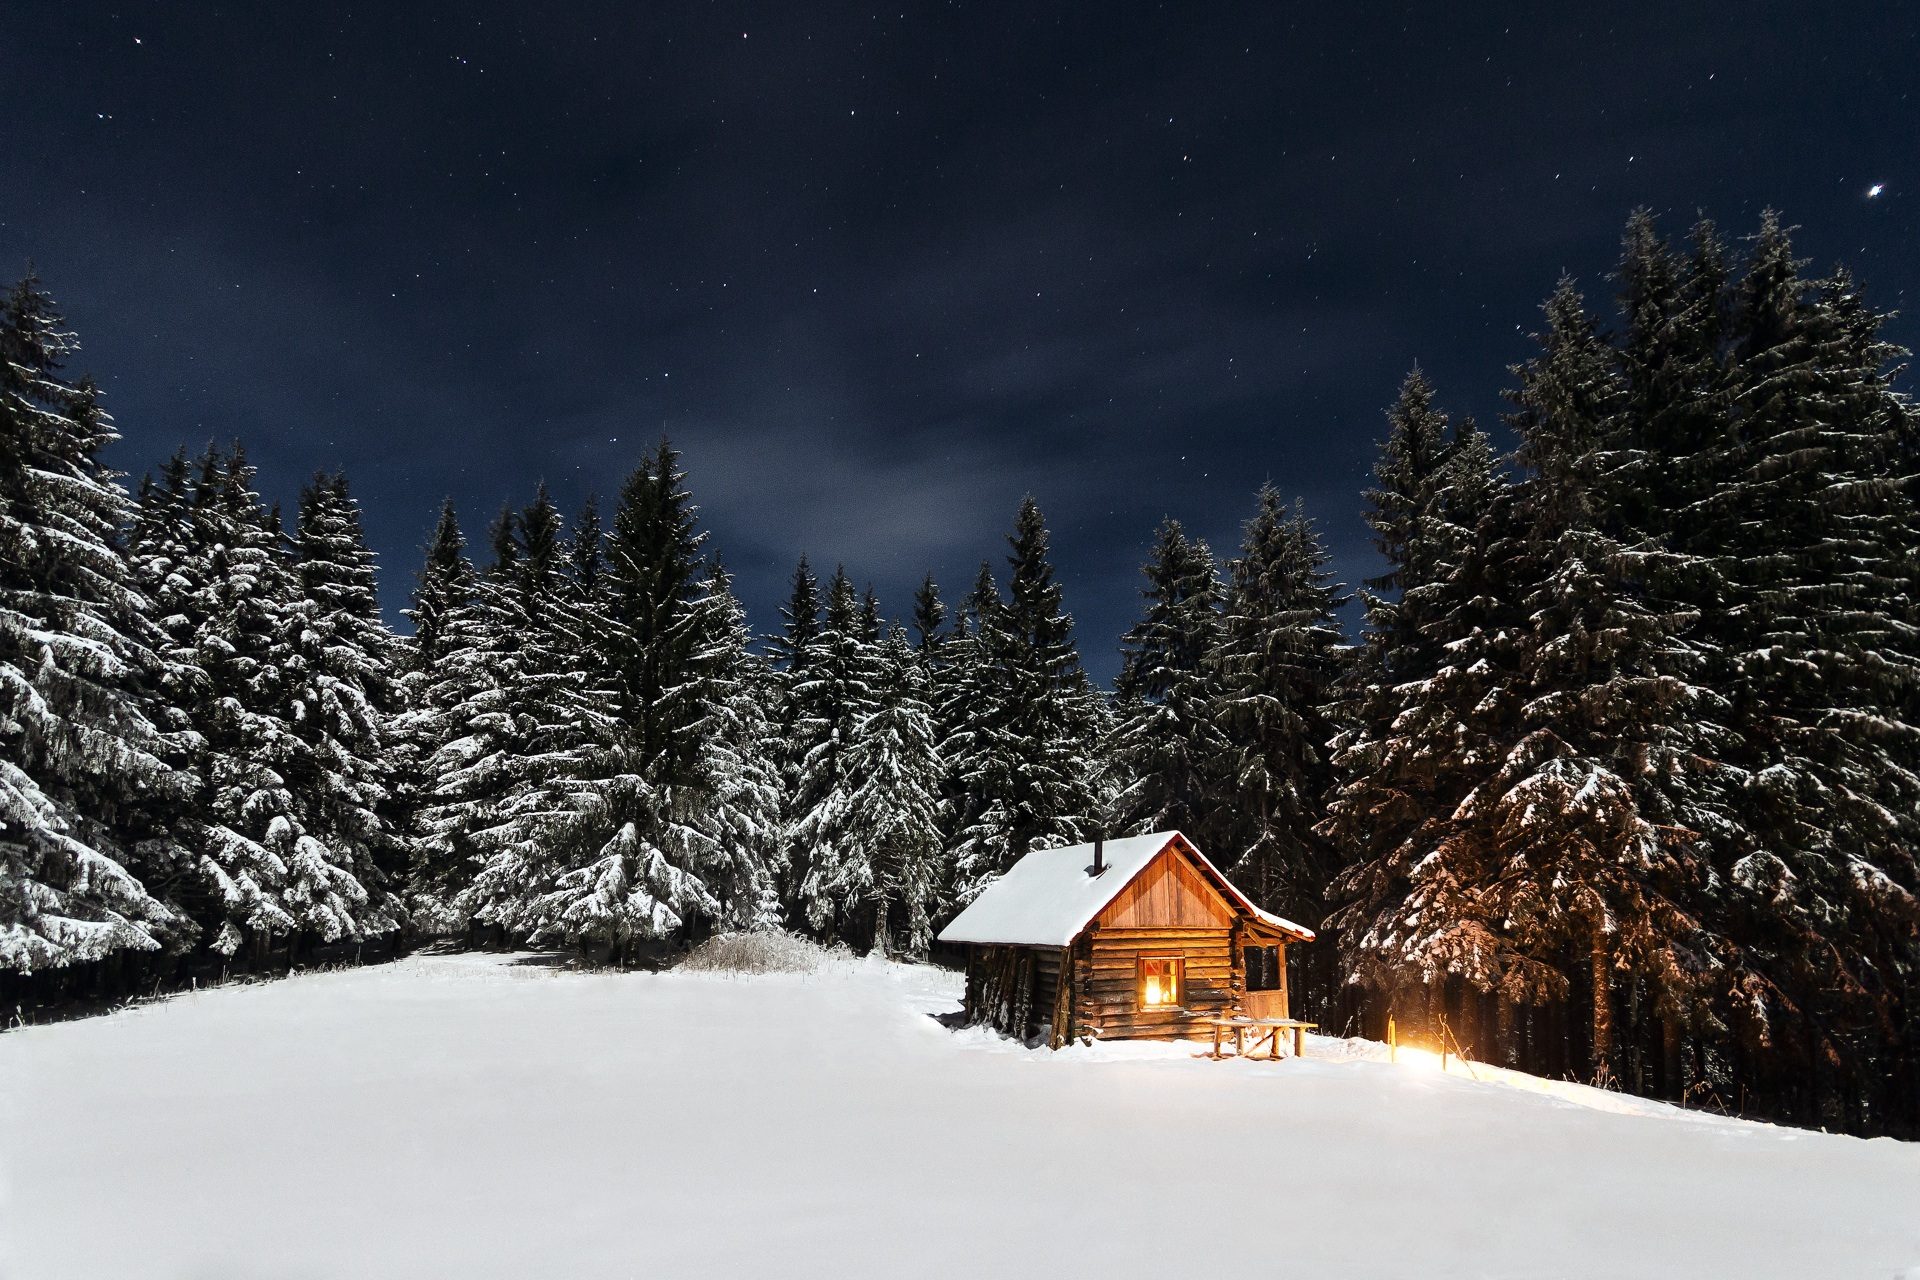 Descargar Winter Cabin Wallpapers Full HD gratis